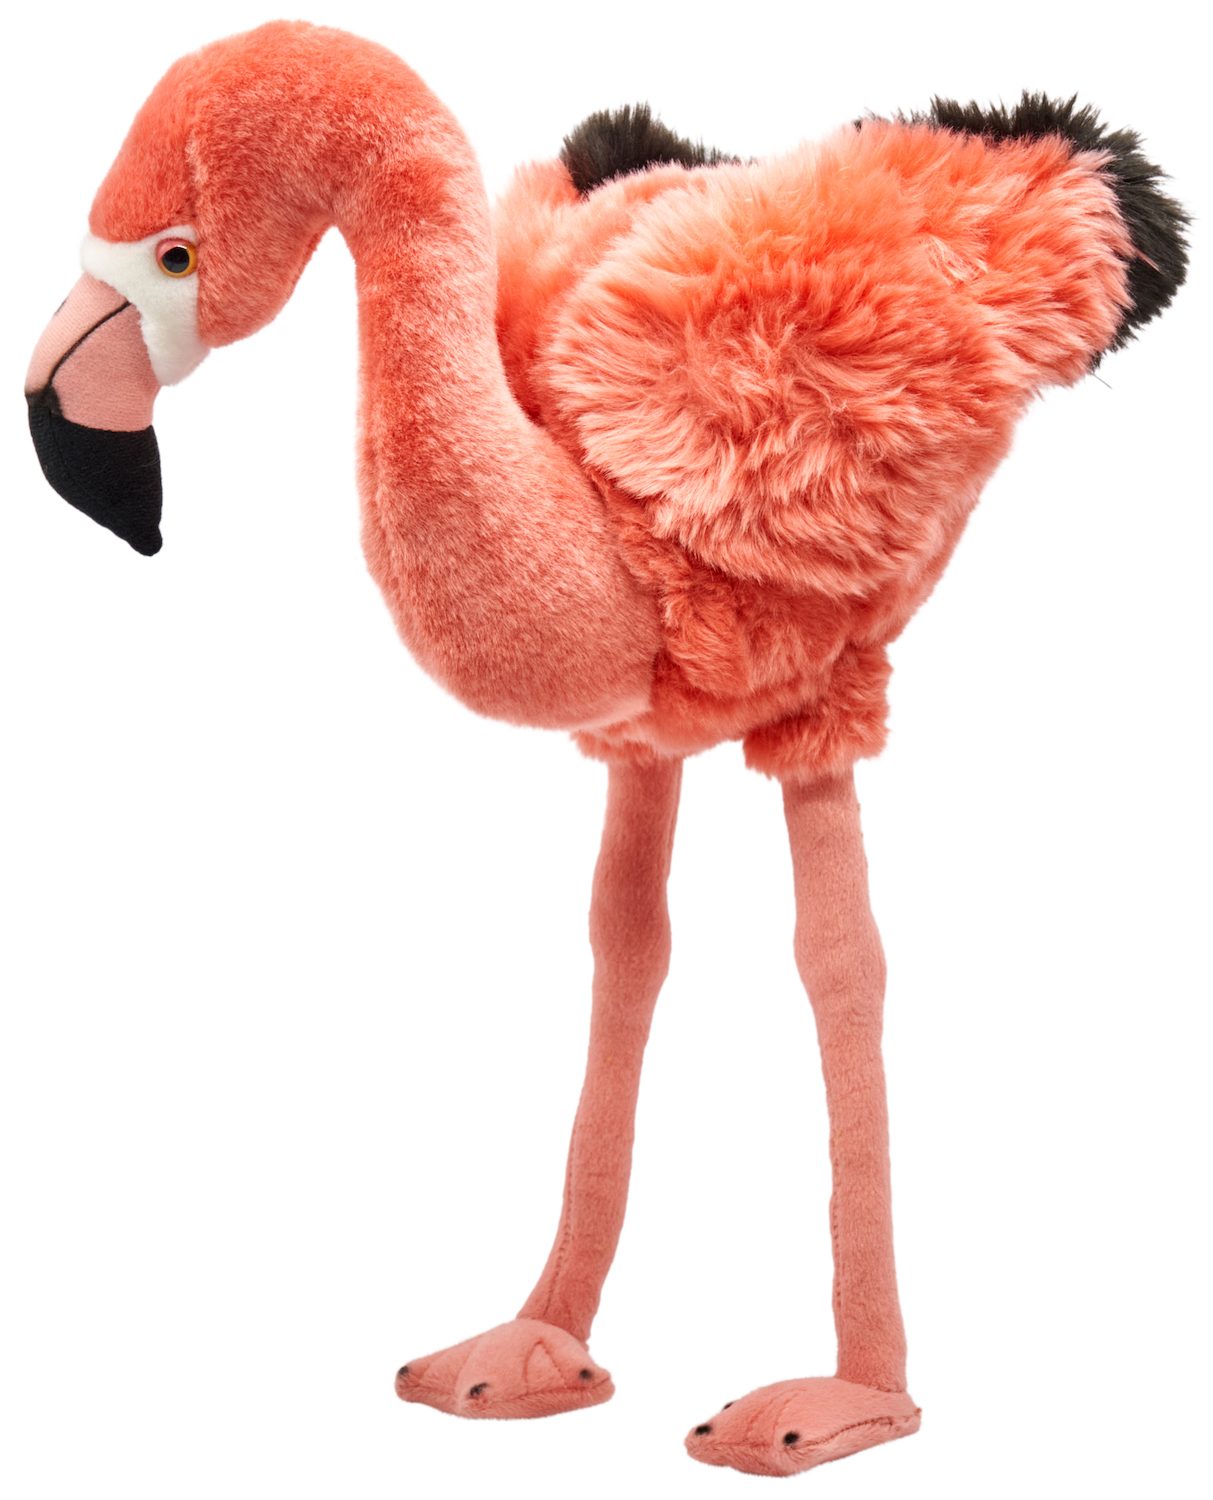 flamingo pink 46 cm (height)